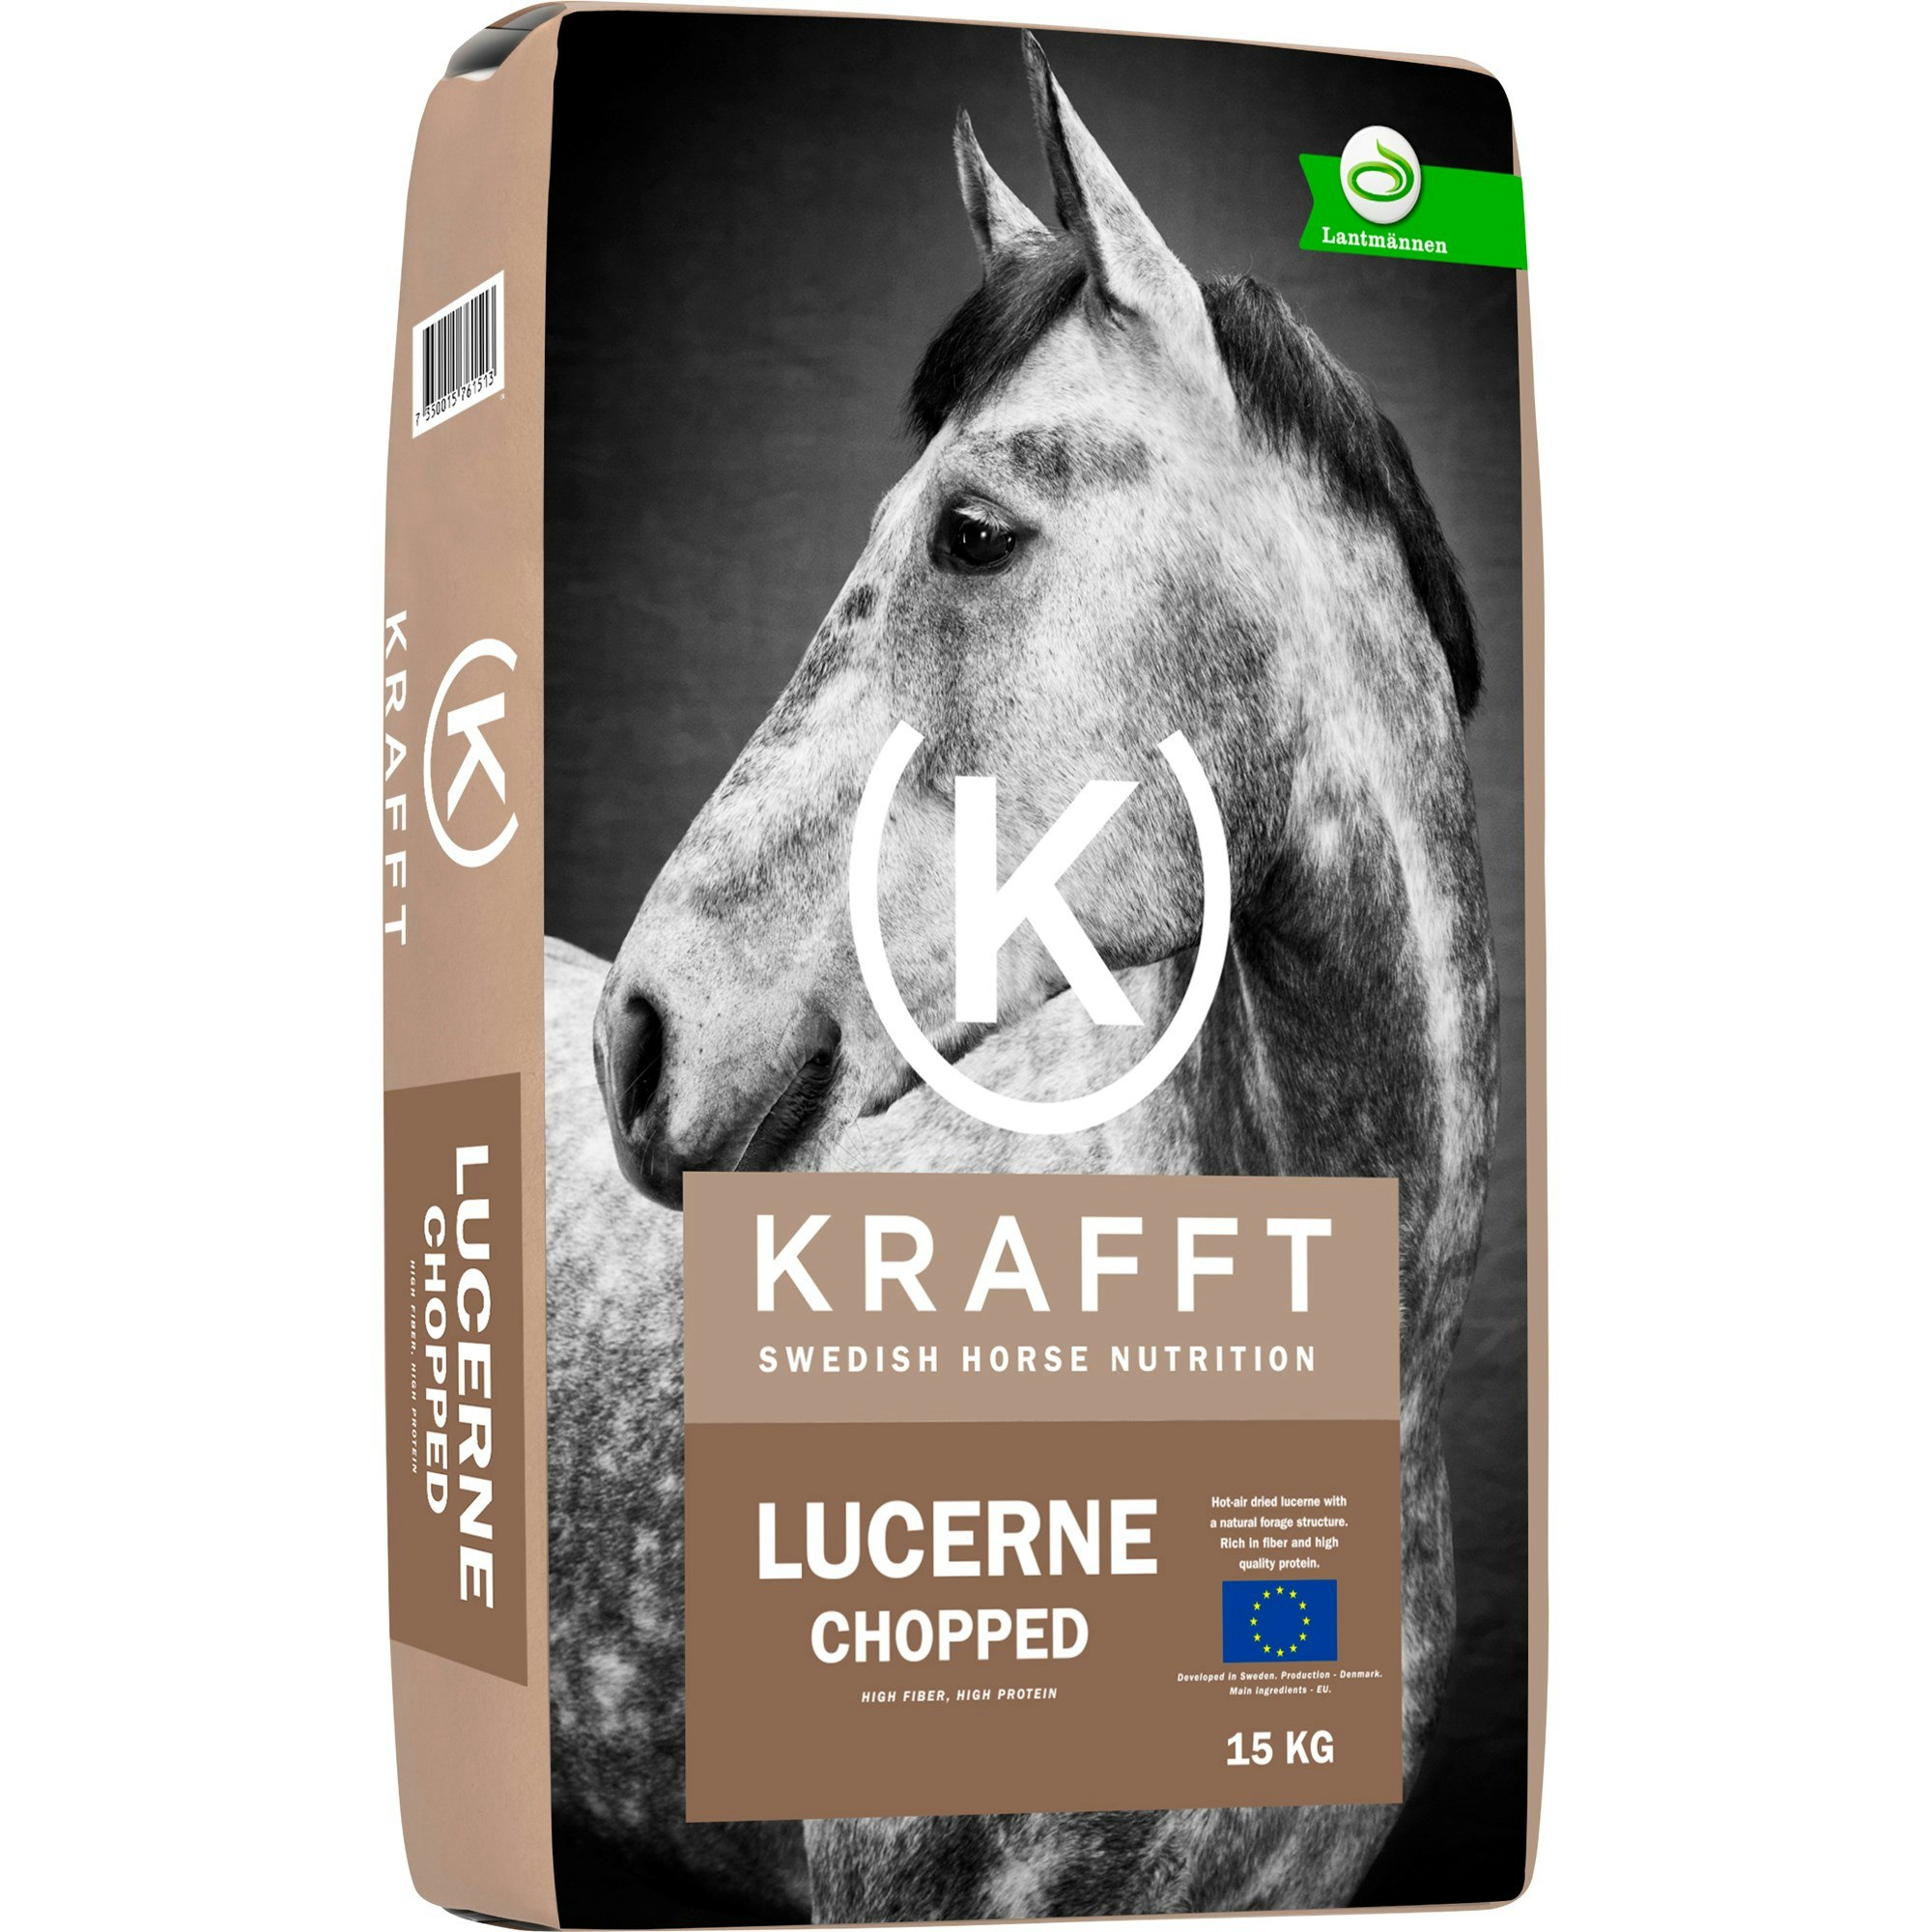 Krafft Lucerne Chopped, 15 kg